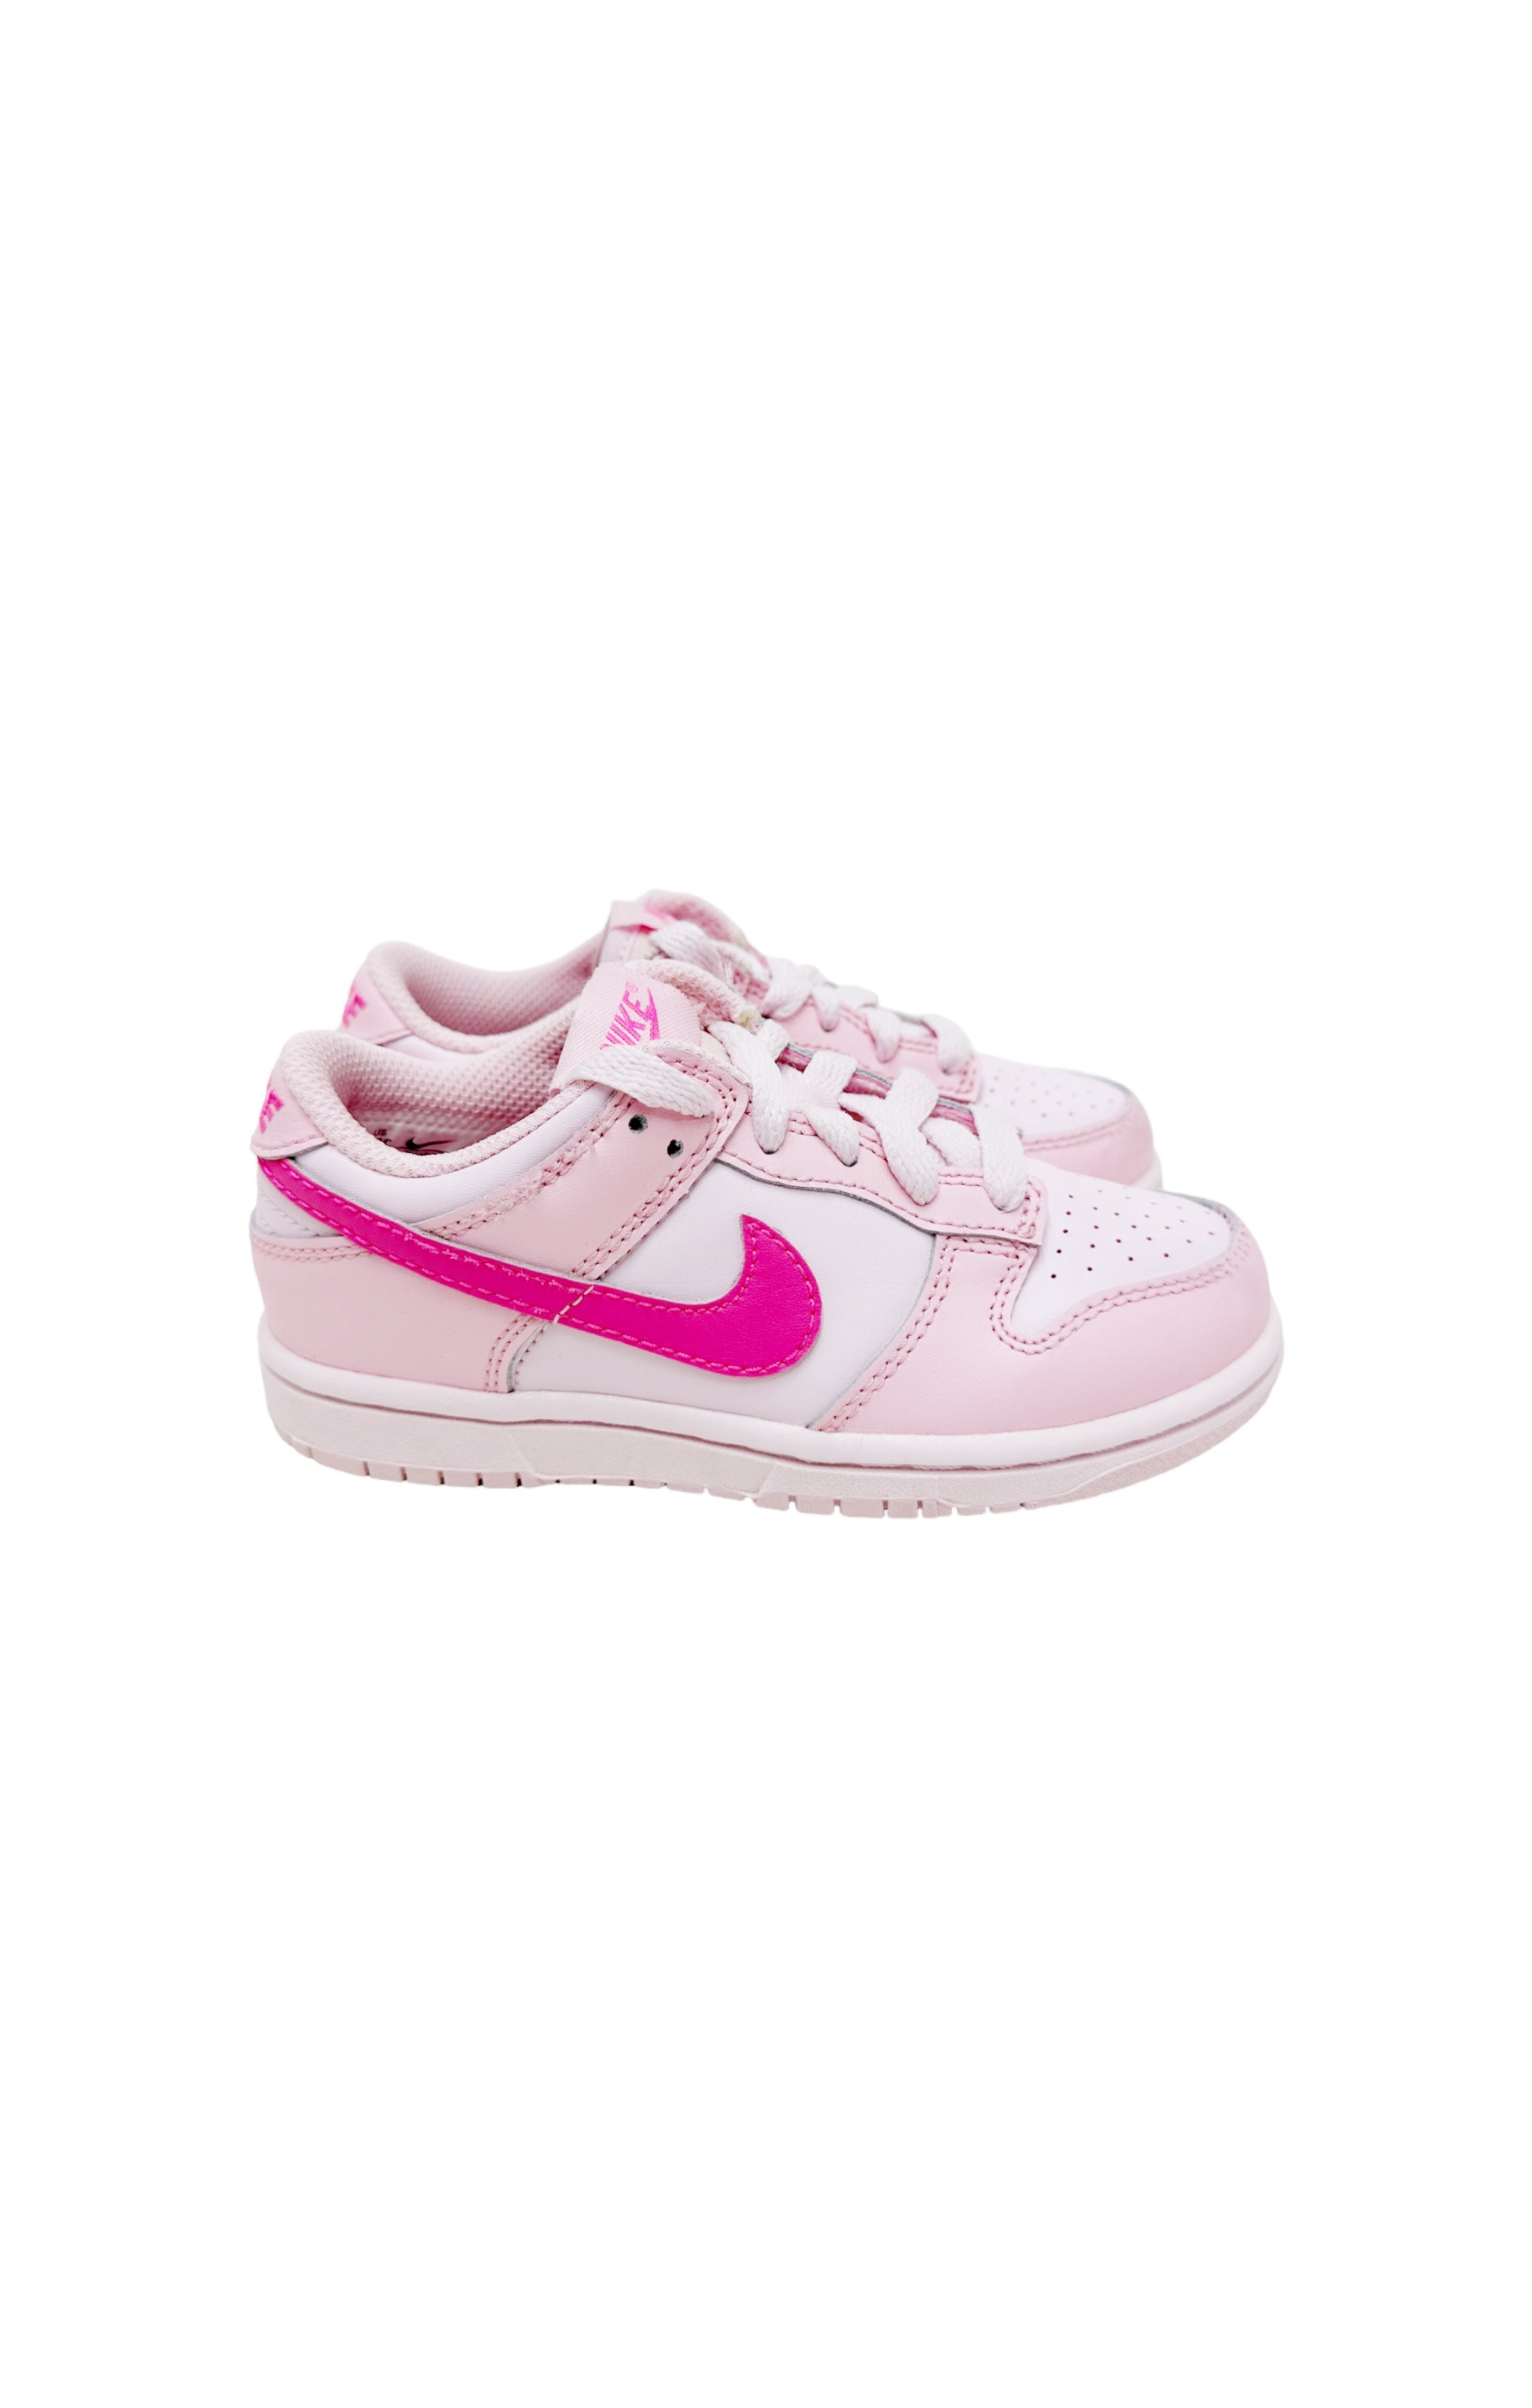 NIKE (RARE) Sneakers Size: Toddler US 12.5C